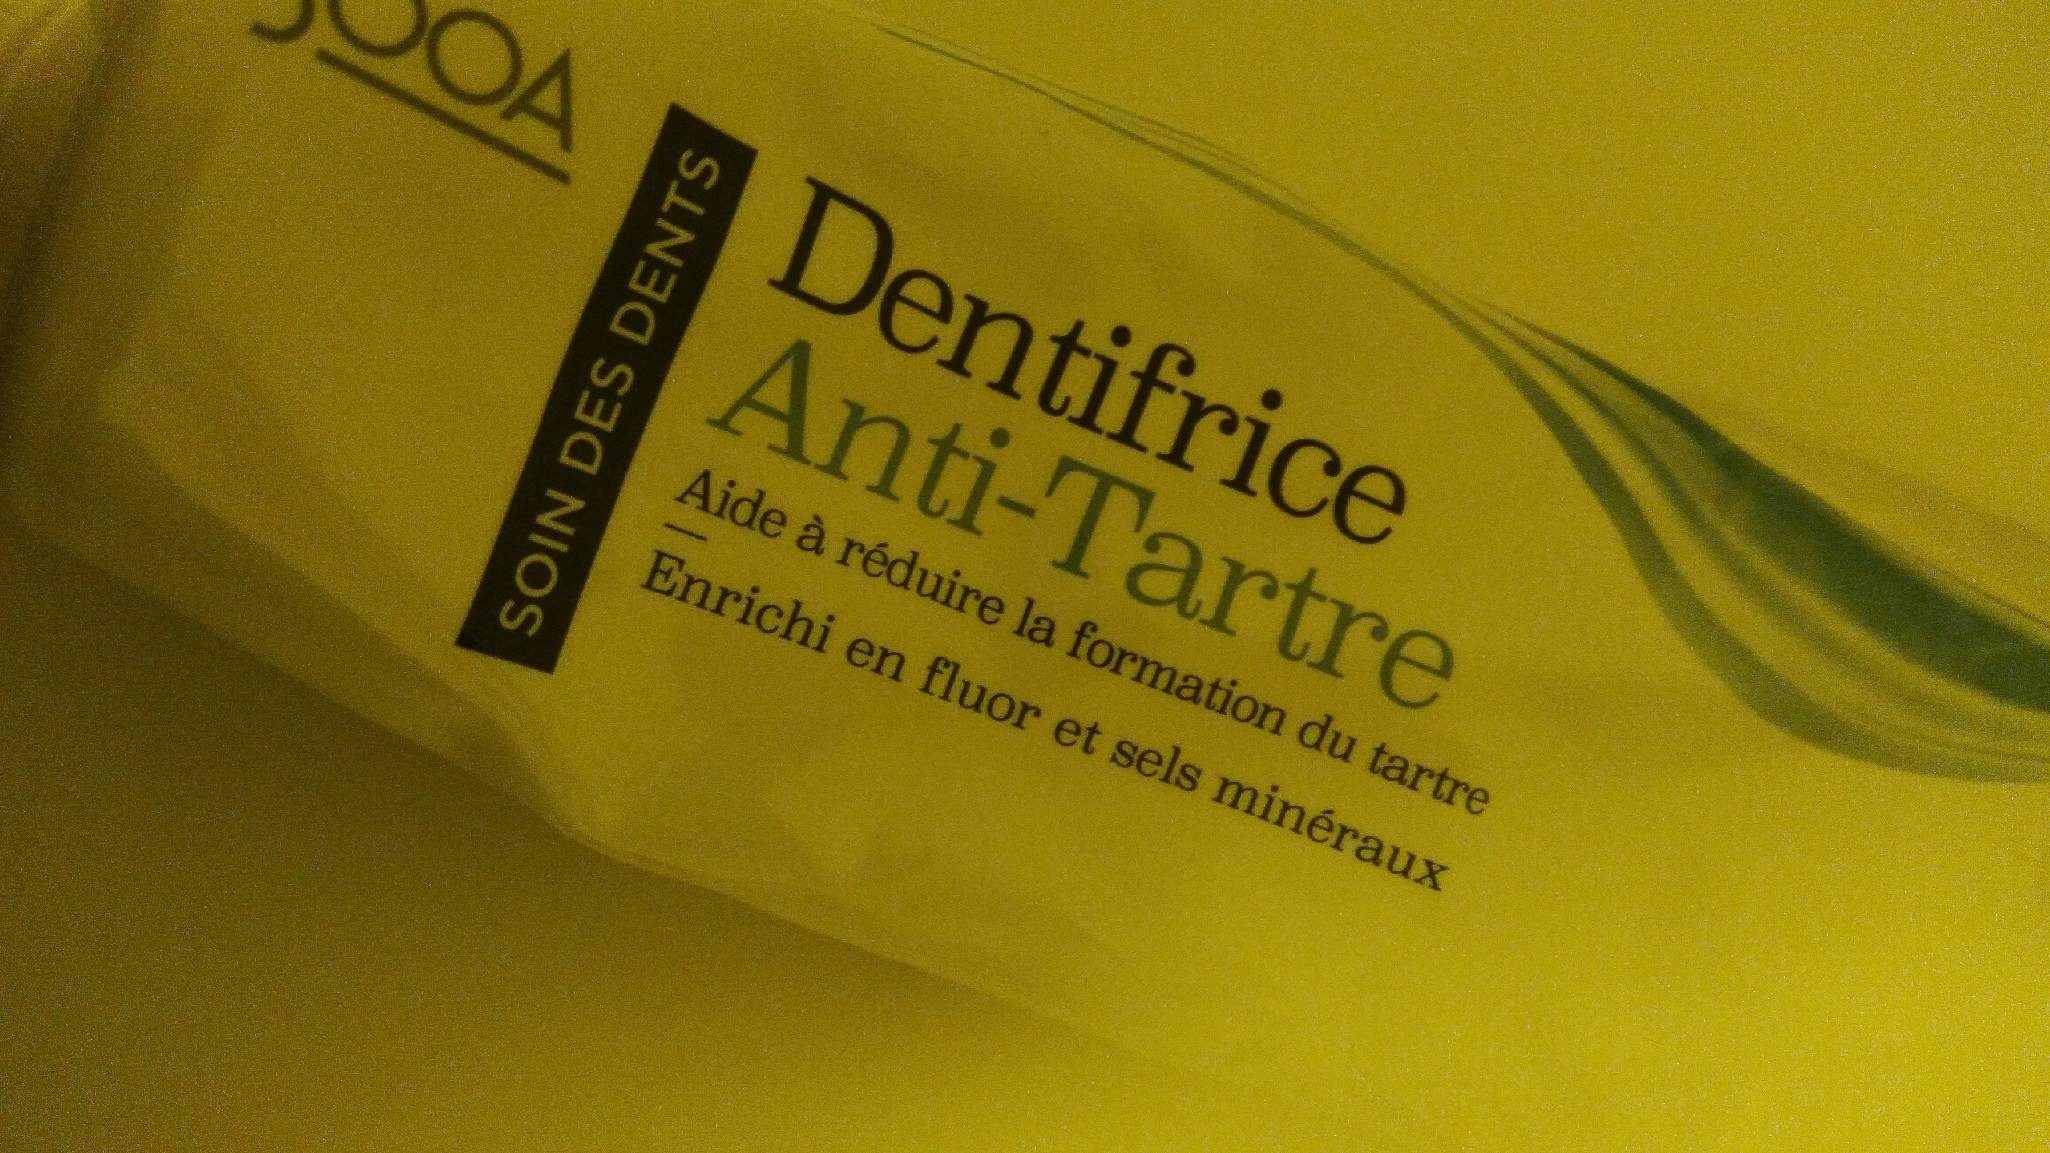 Dentifrice Anti-Tartre - Product - fr